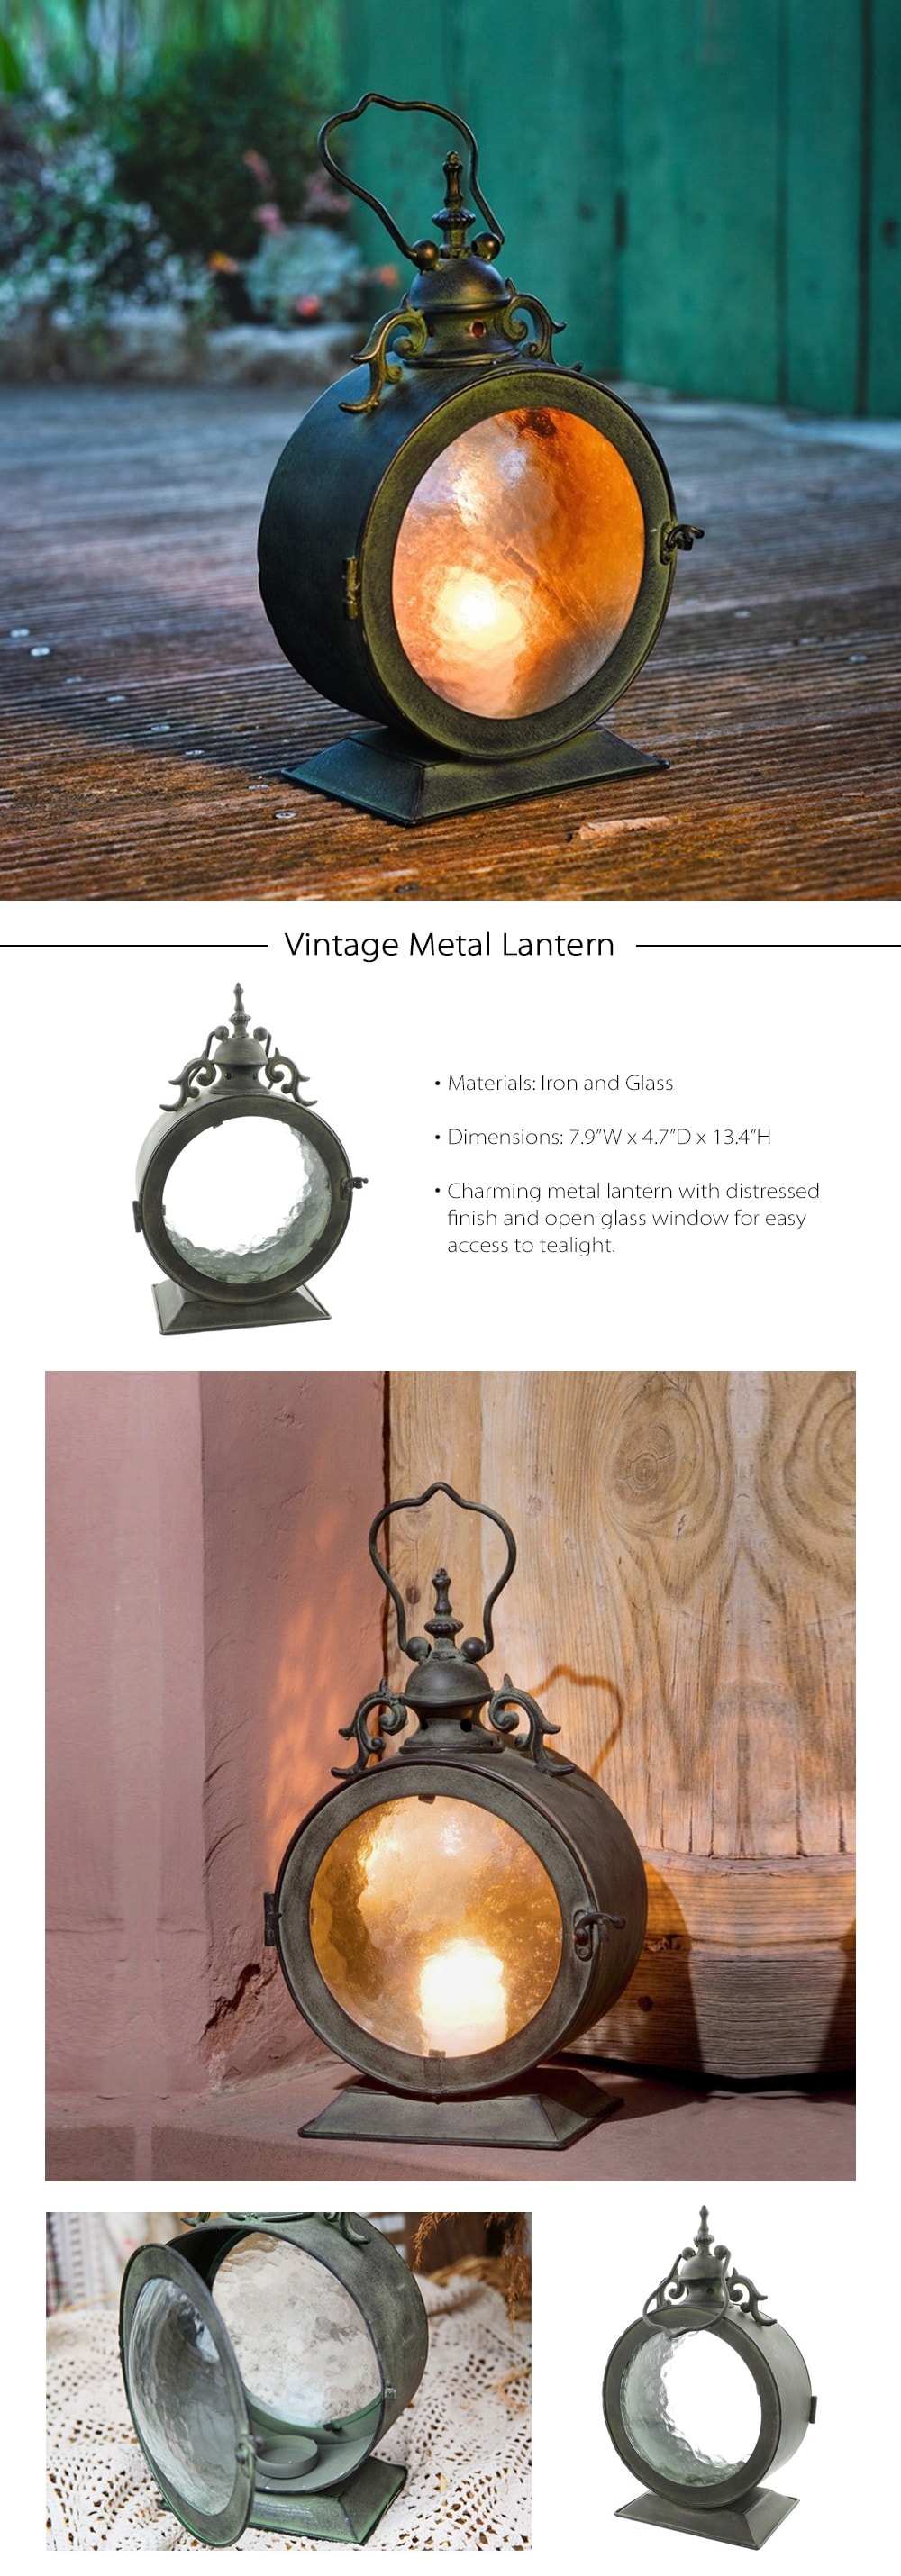 https://rs.apolloboxassets.com/images/sku2335-vintage-metal-lantern/detail.jpg